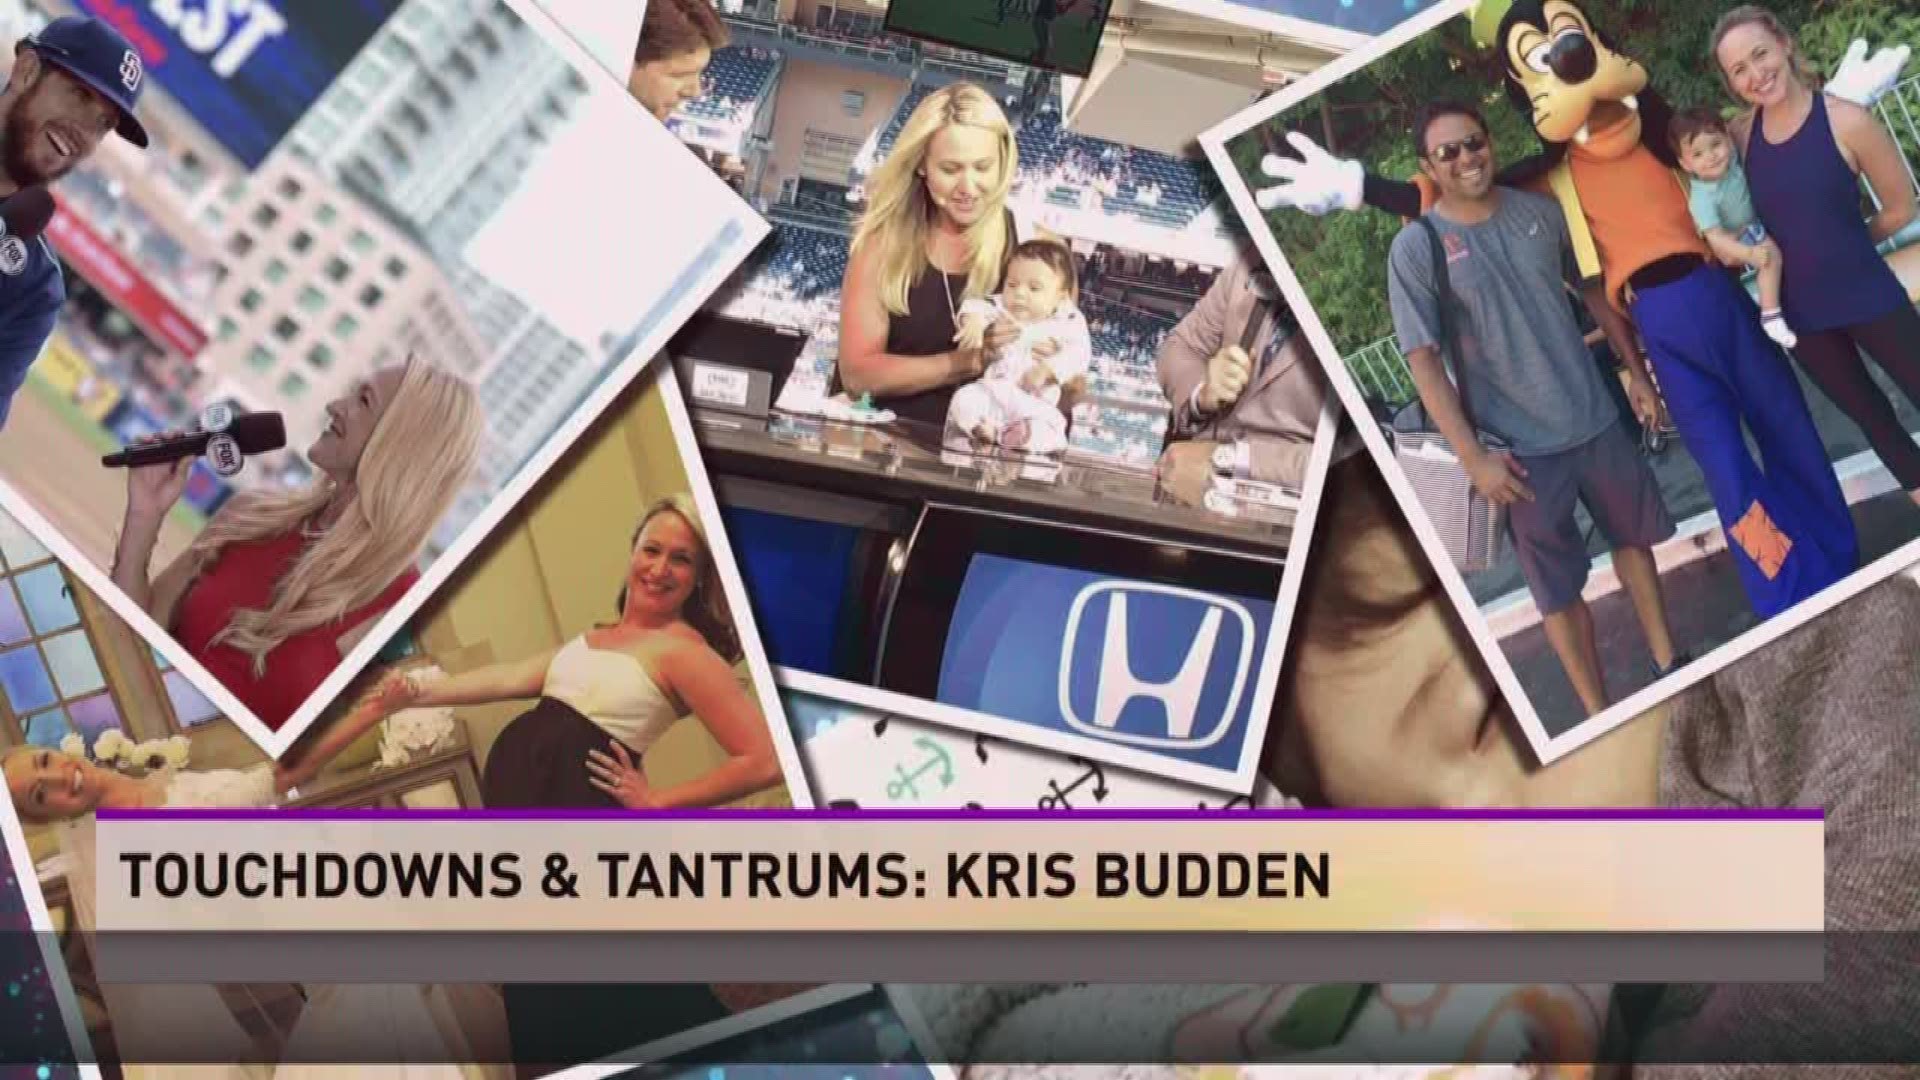 Former WBIR sports anchor Kris Budden talks about publicly sharing her trials as a new mother.